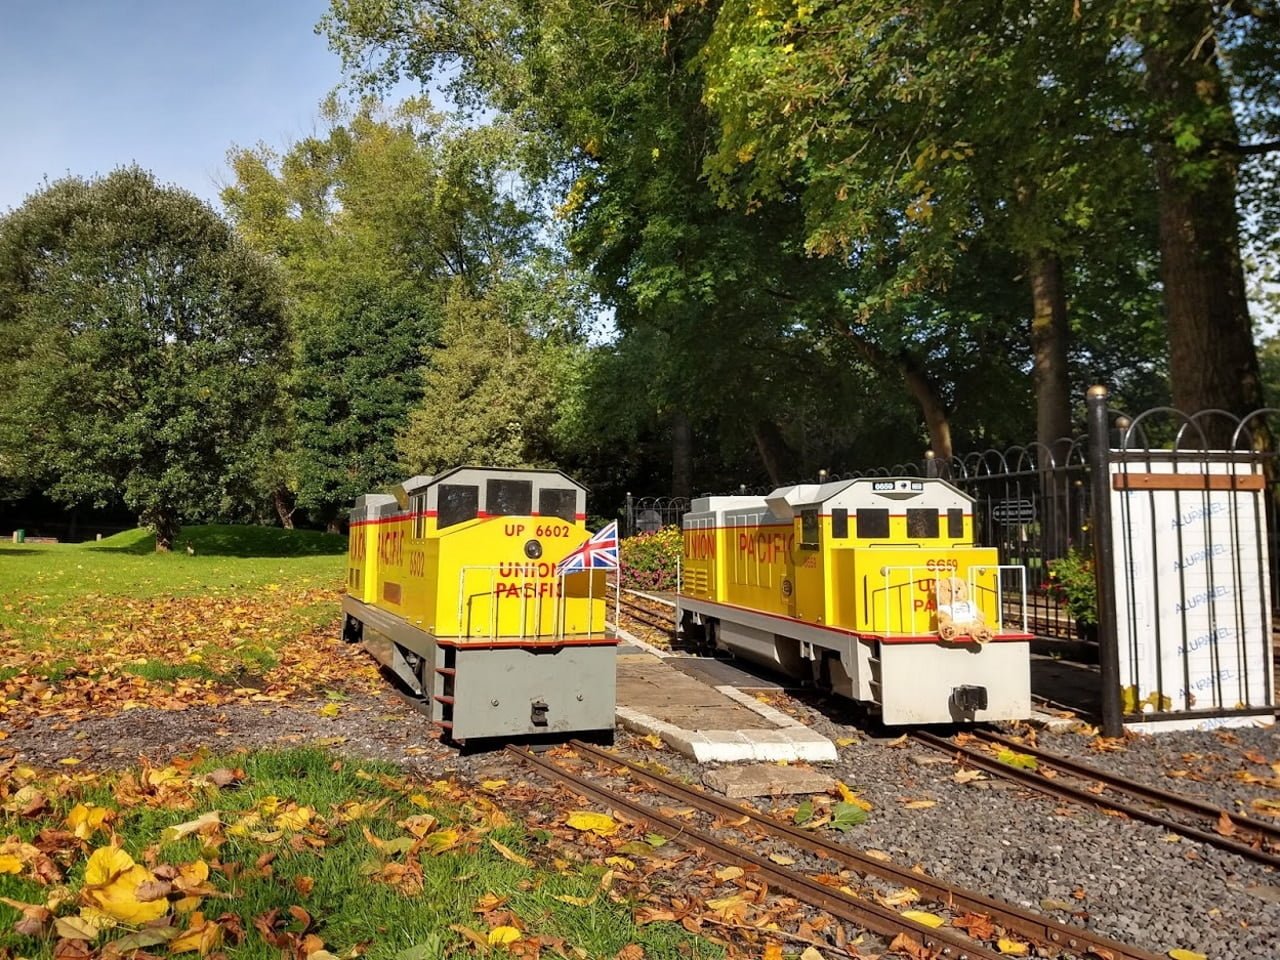 Thompson Park Railway in Burnley